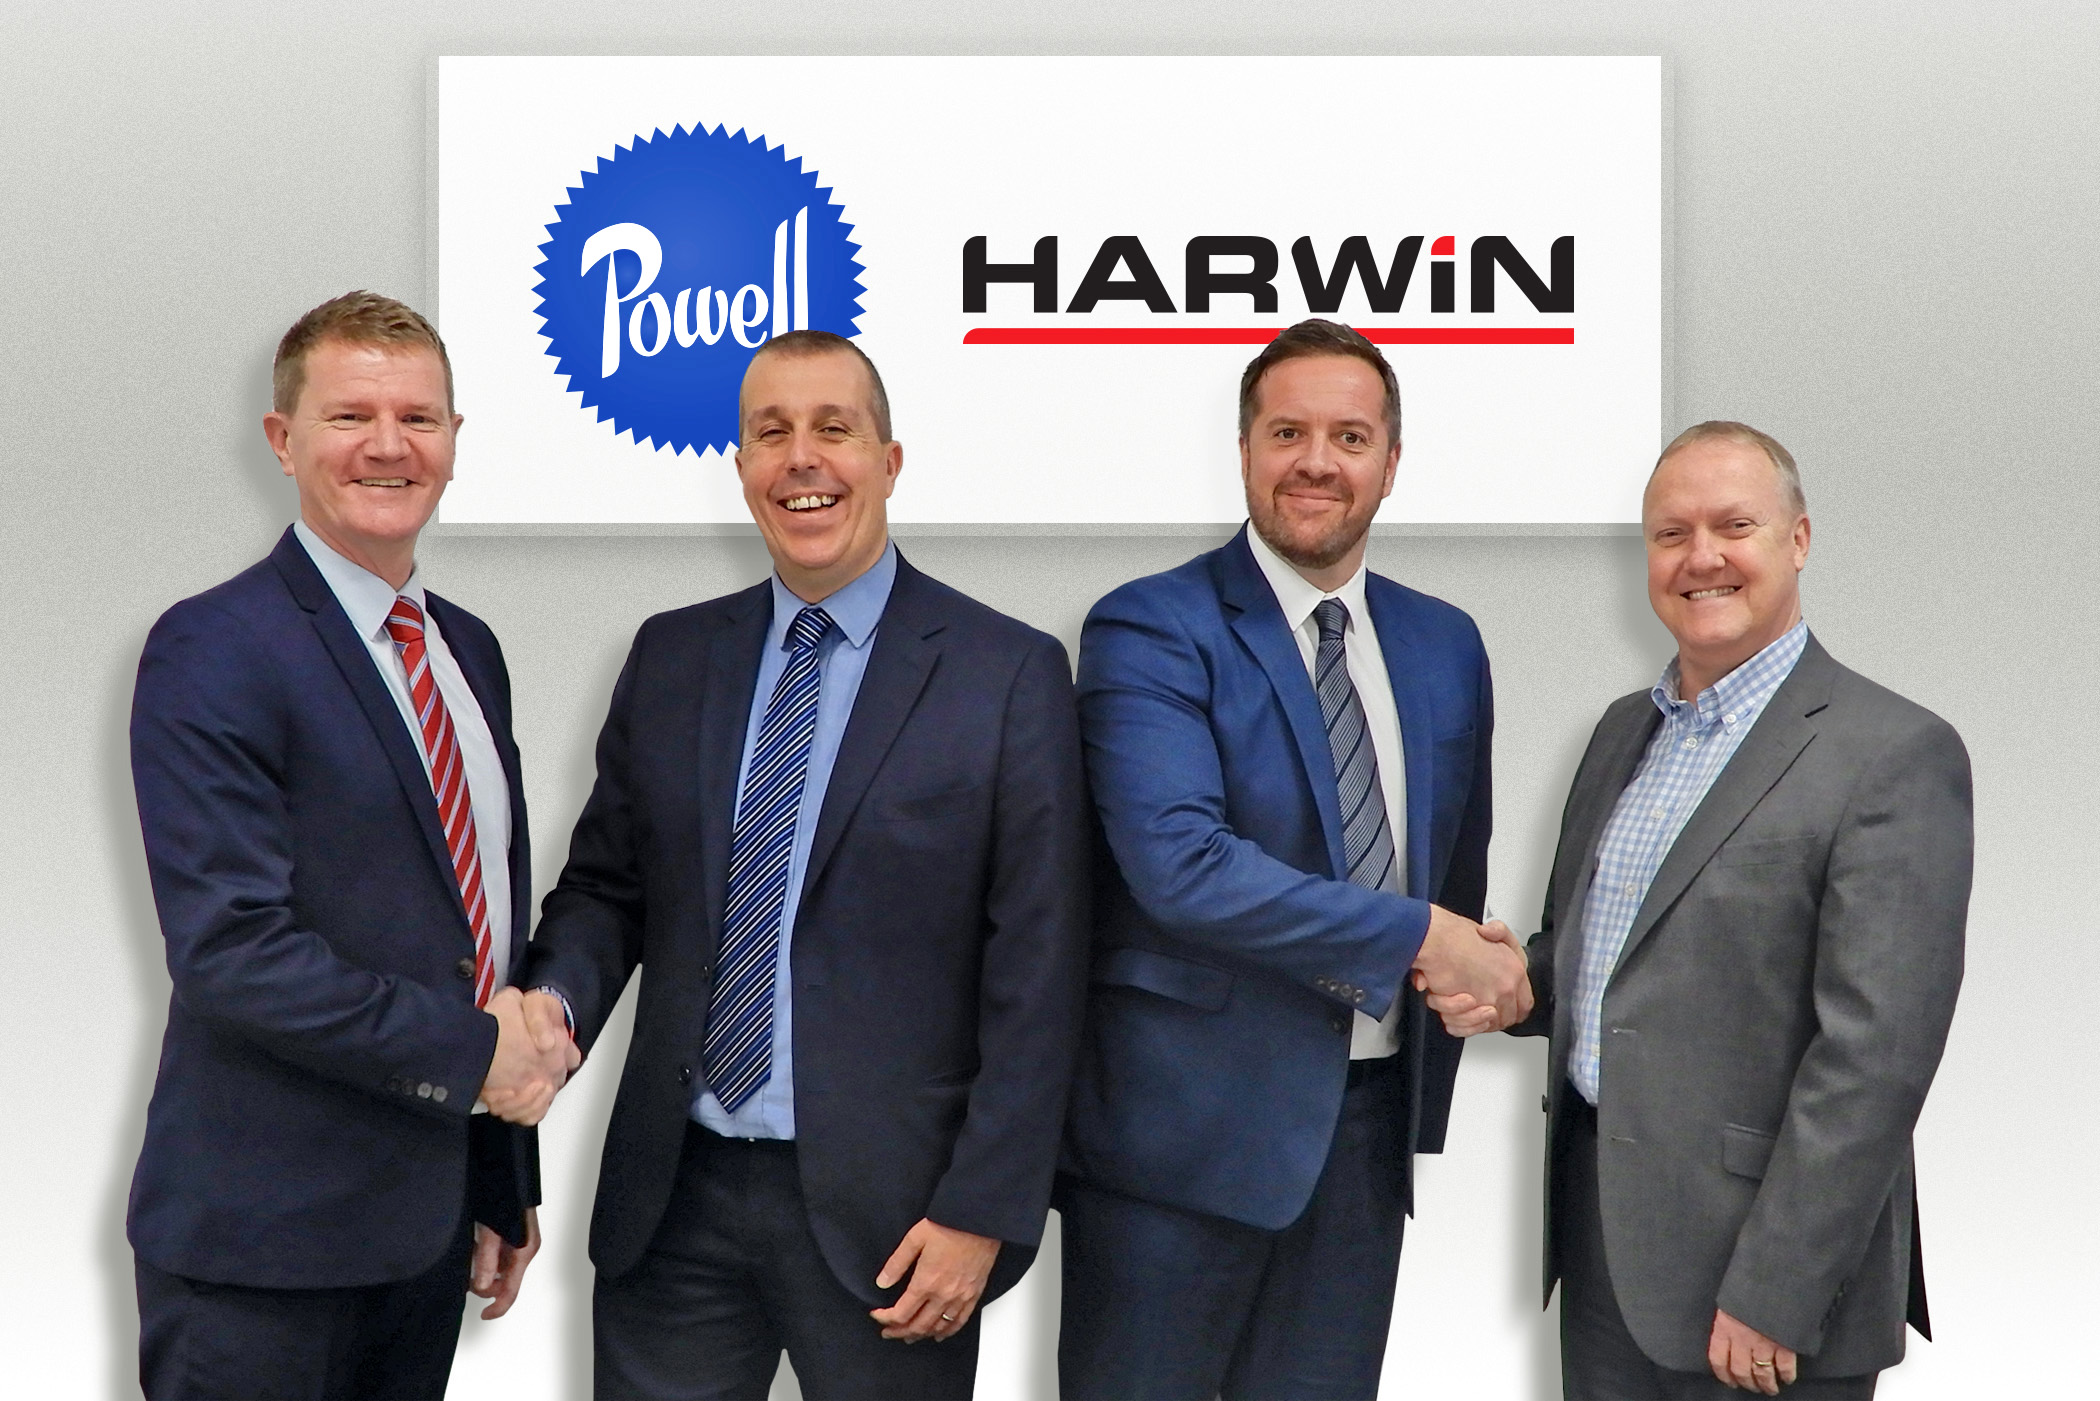 industry news - Harwin adss Powell as distributor